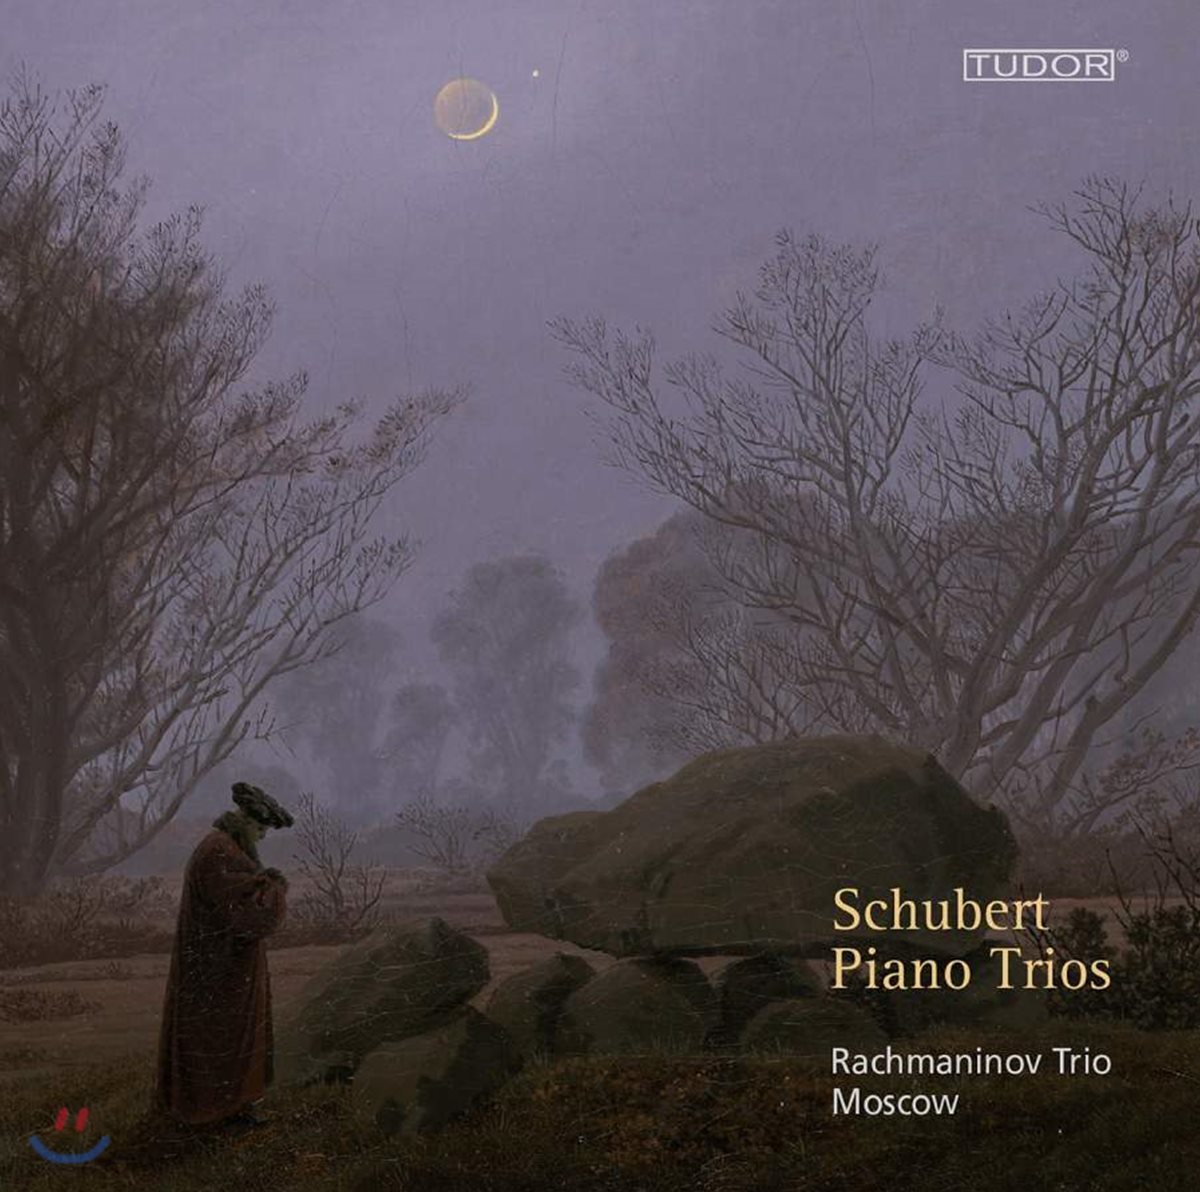 Rachmaninov Trio Moscow 슈베르트: 피아노 트리오 1번 D898, 슈베르트 피아노 2번 D929, 노투르노 (Schubert: Piano Trios)